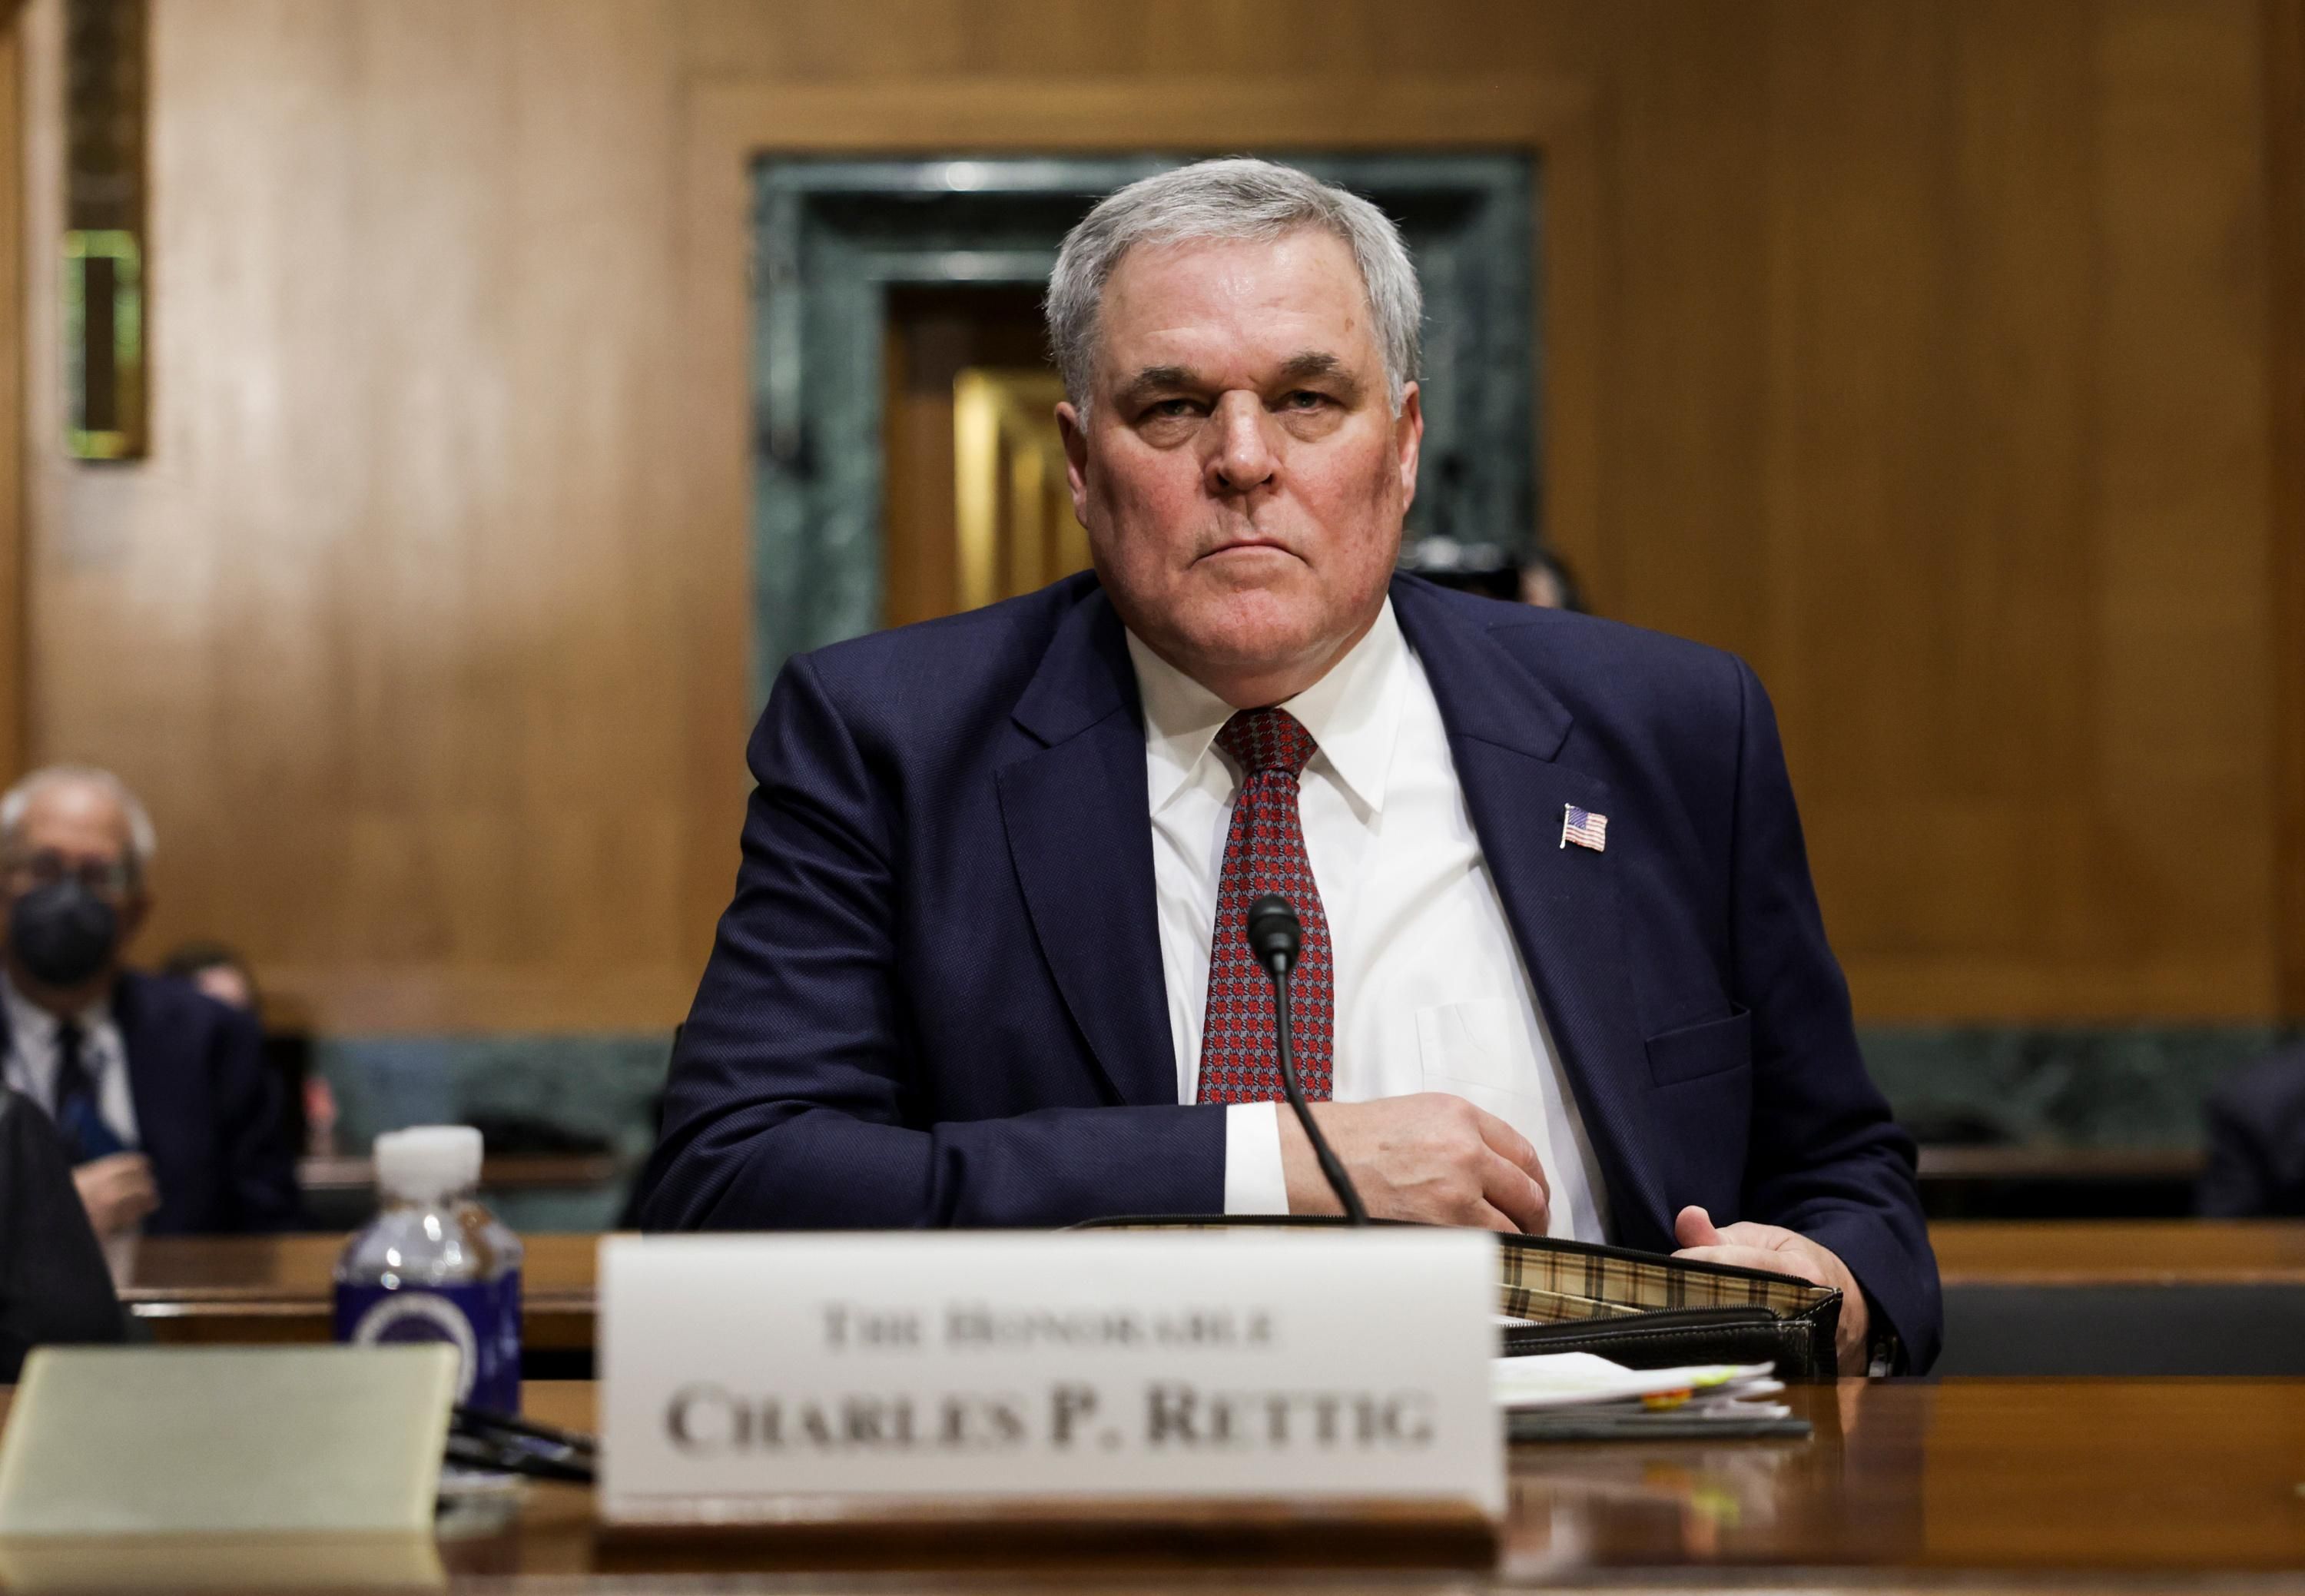 IRS Commissioner Charles Rettig testifies before Congress